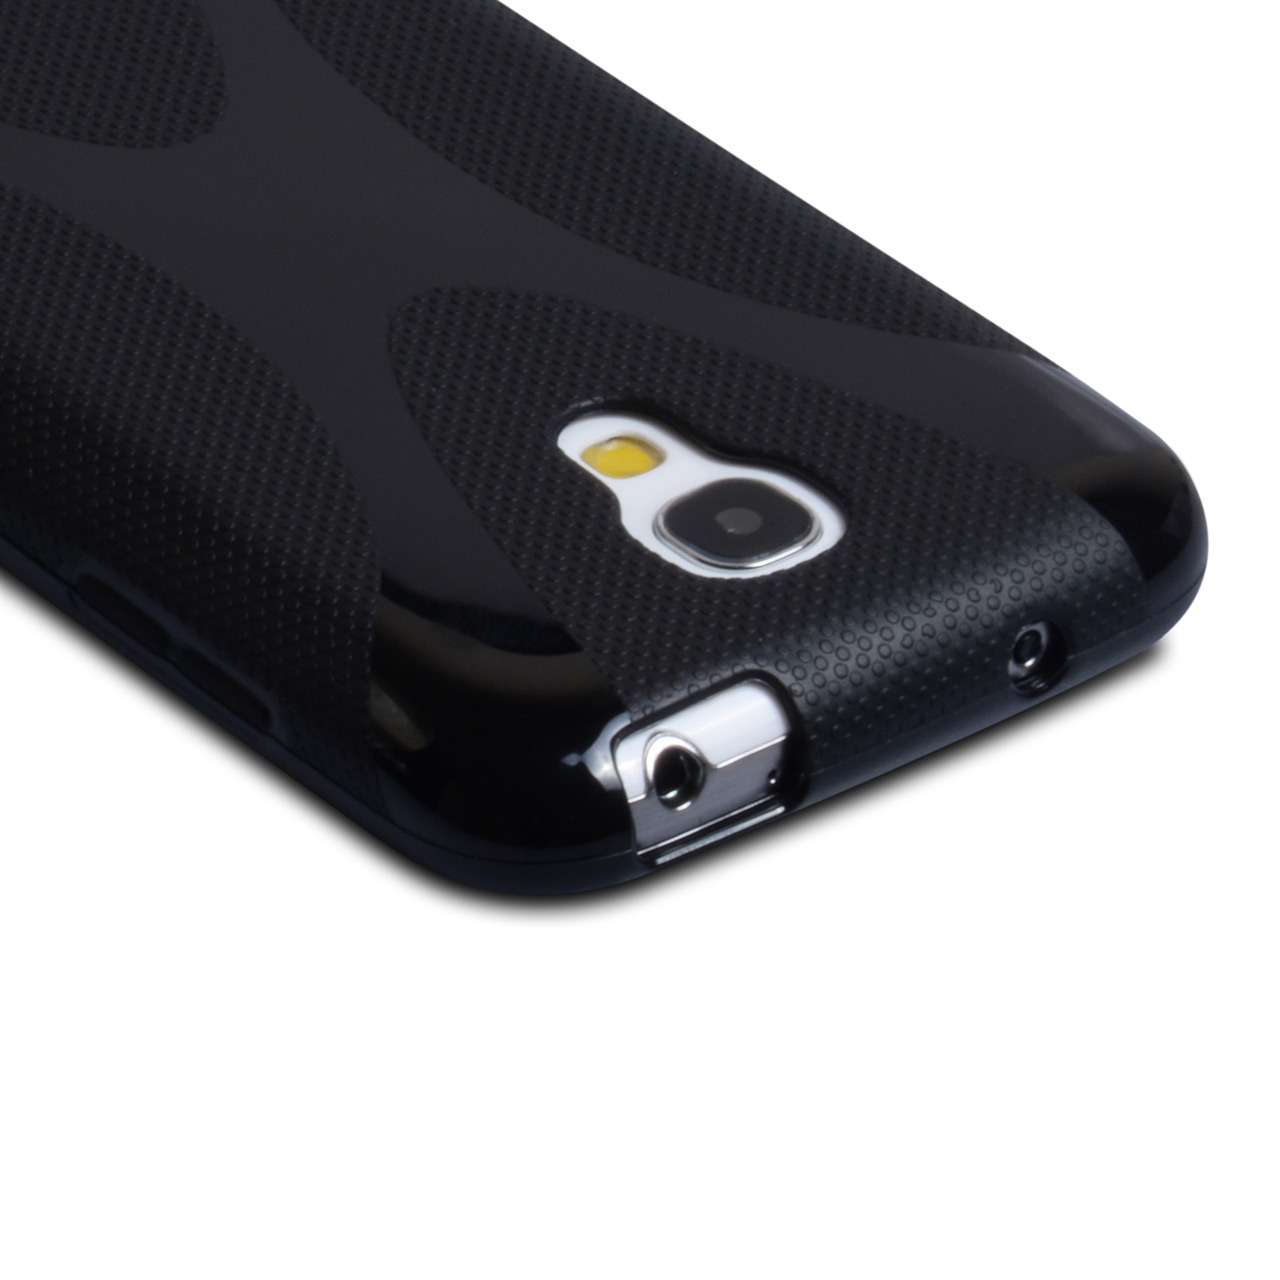 YouSave Accessories Samsung Galaxy S4 Mini Black X-Line Gel Case